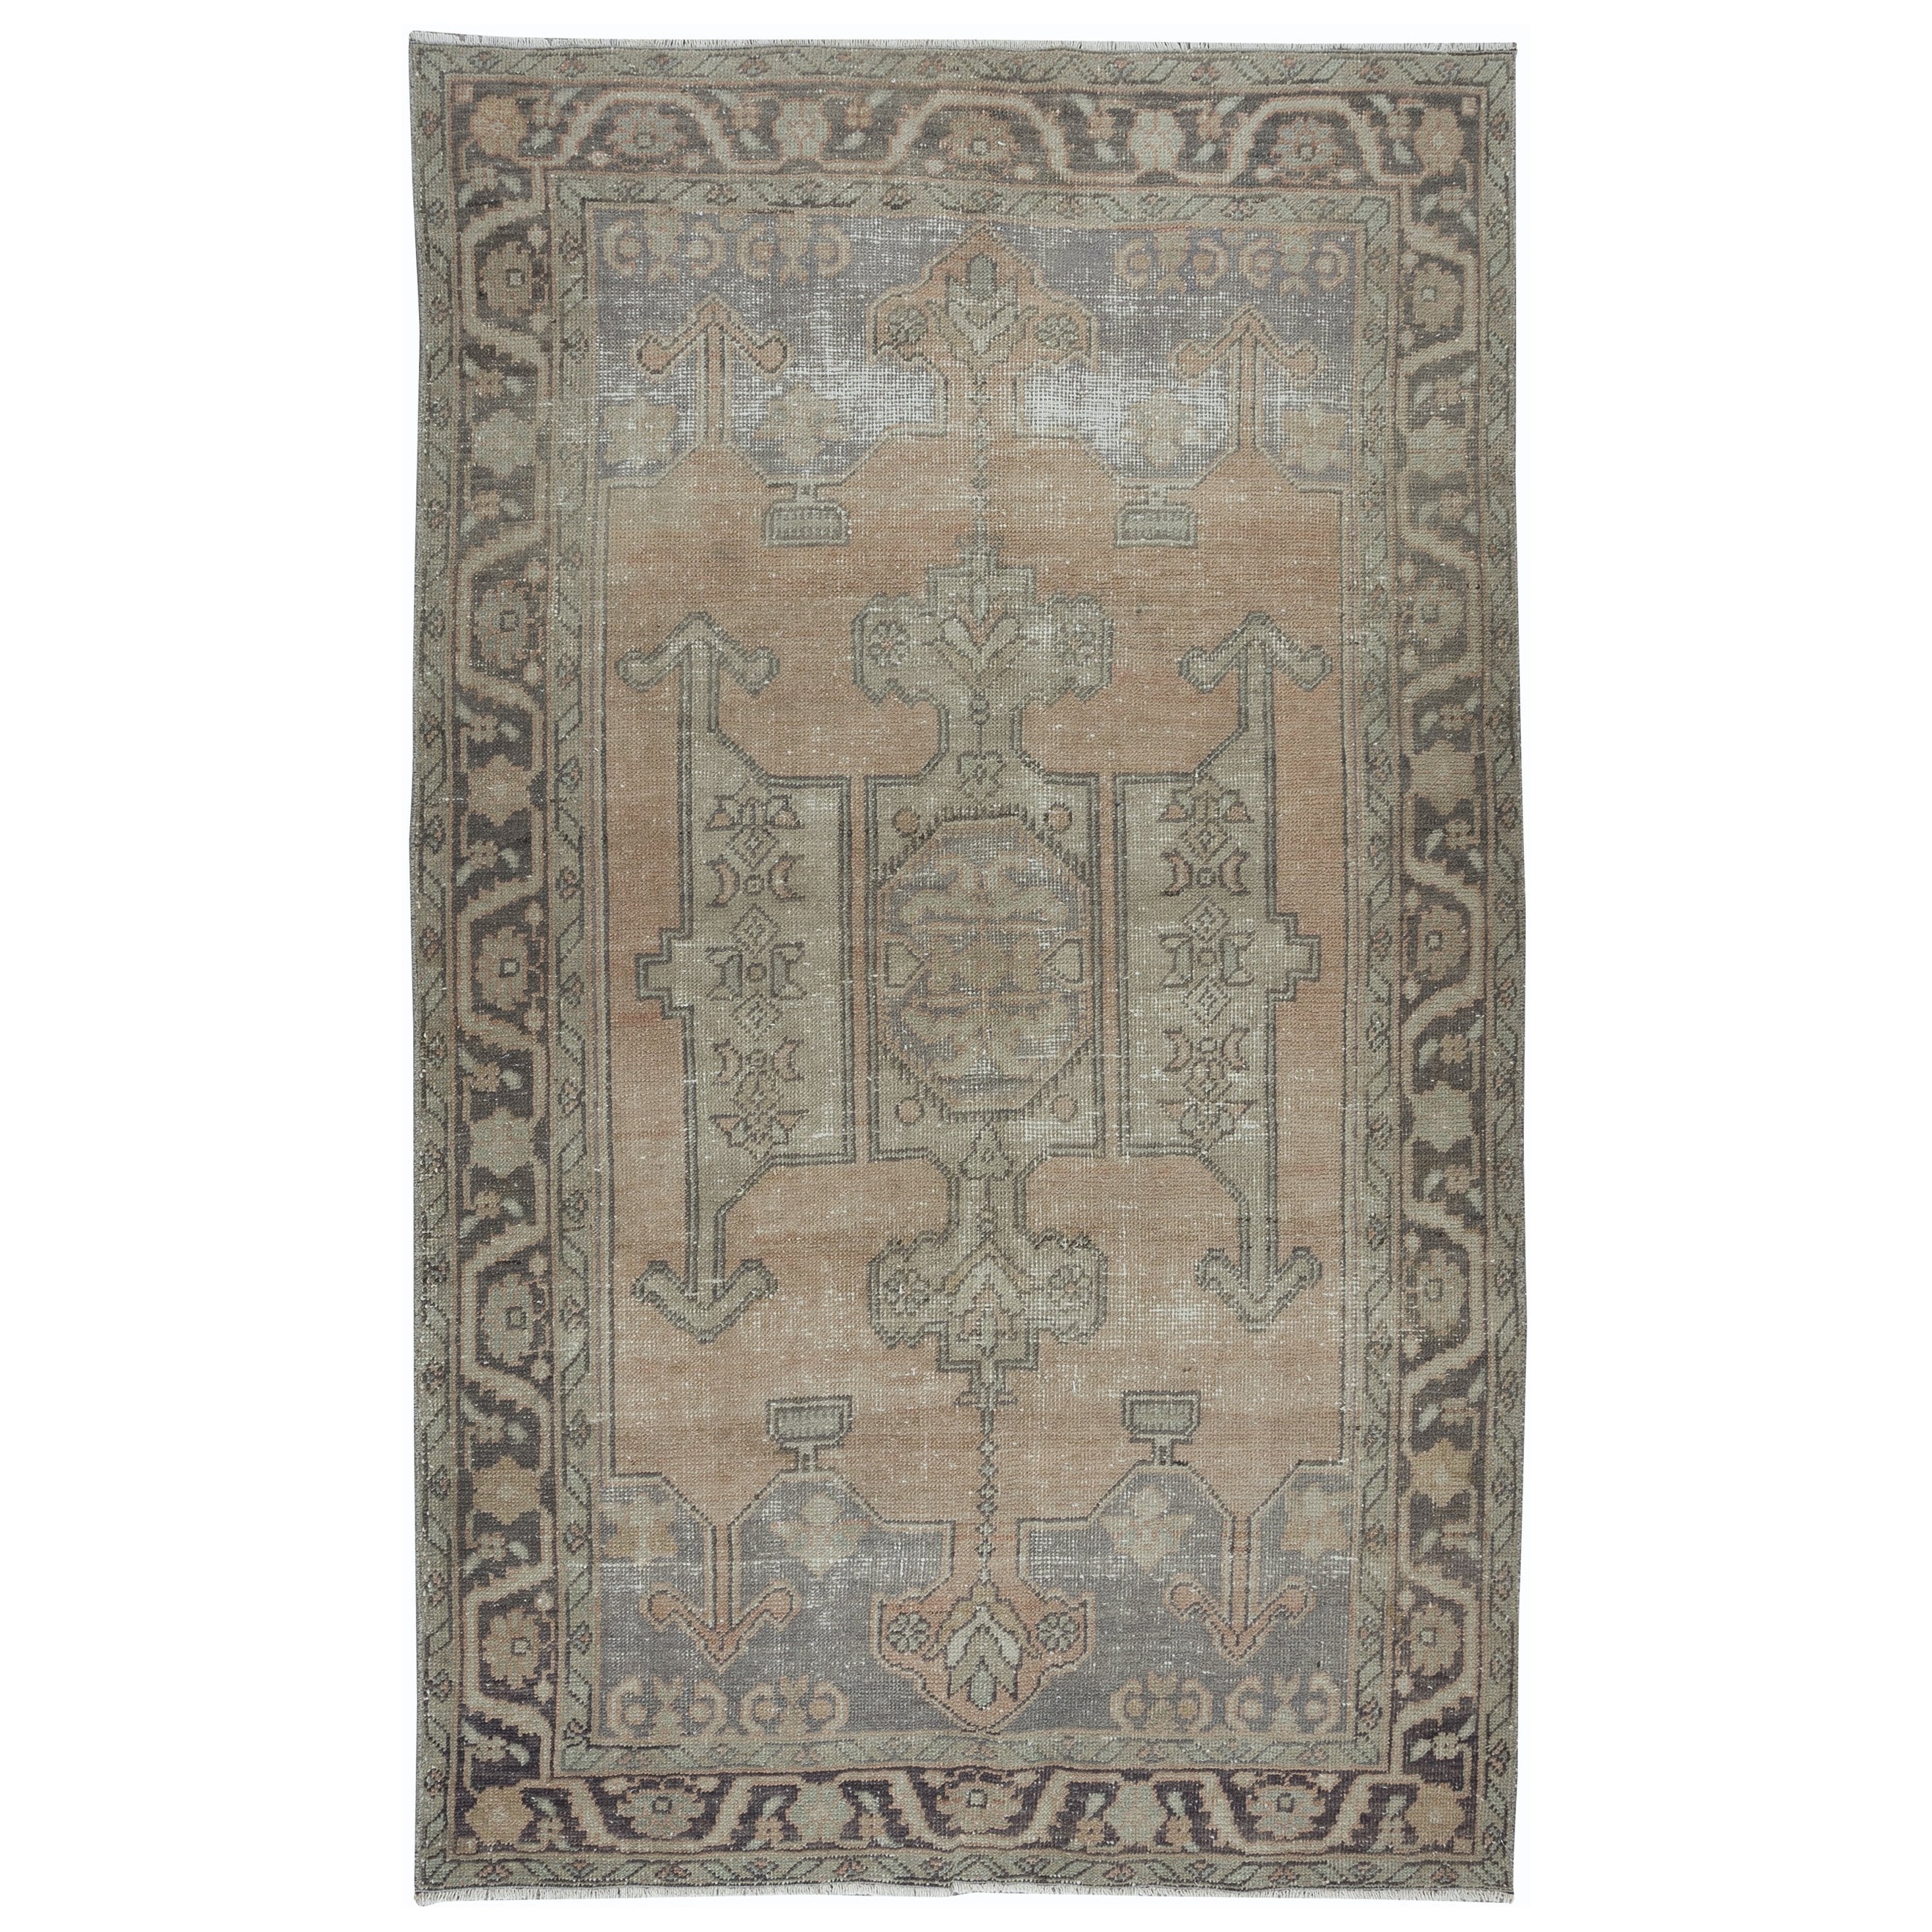 5x8.3 Ft Vintage Handmade Rug in Muted Colors, Anatolian Geometric Wool Carpet